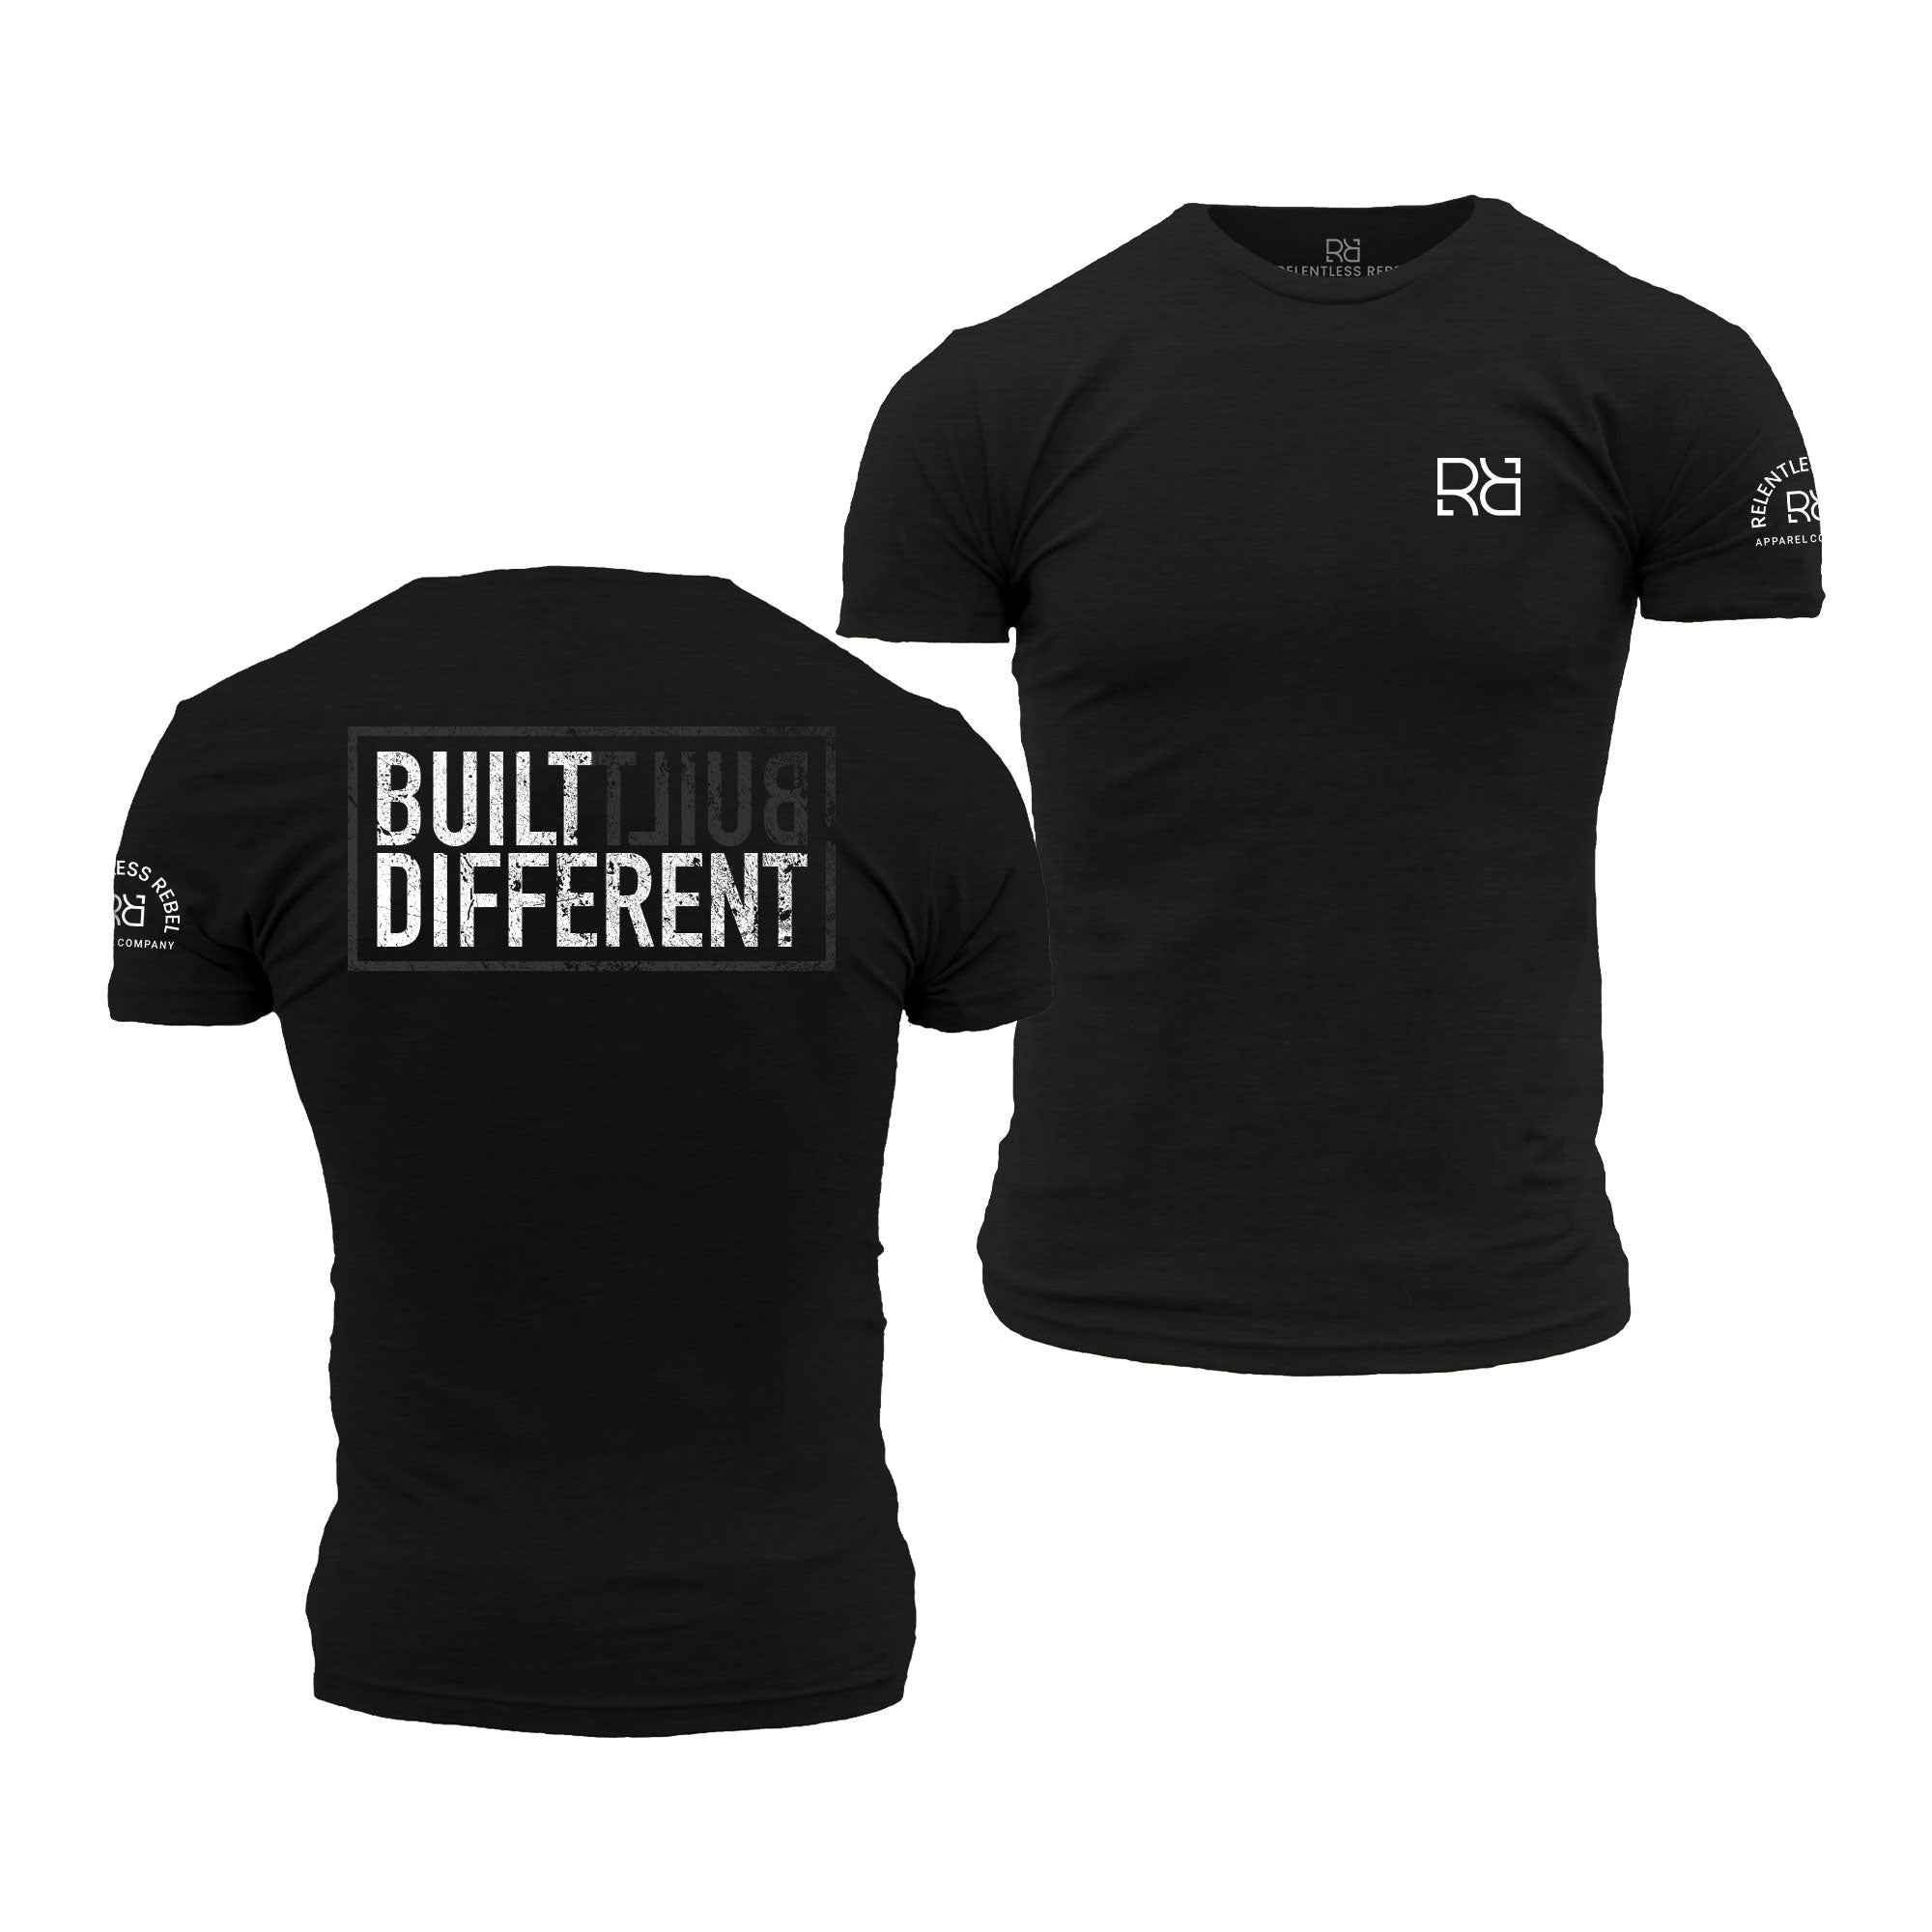 Relentless Rebel's Built Different back design t-shirt